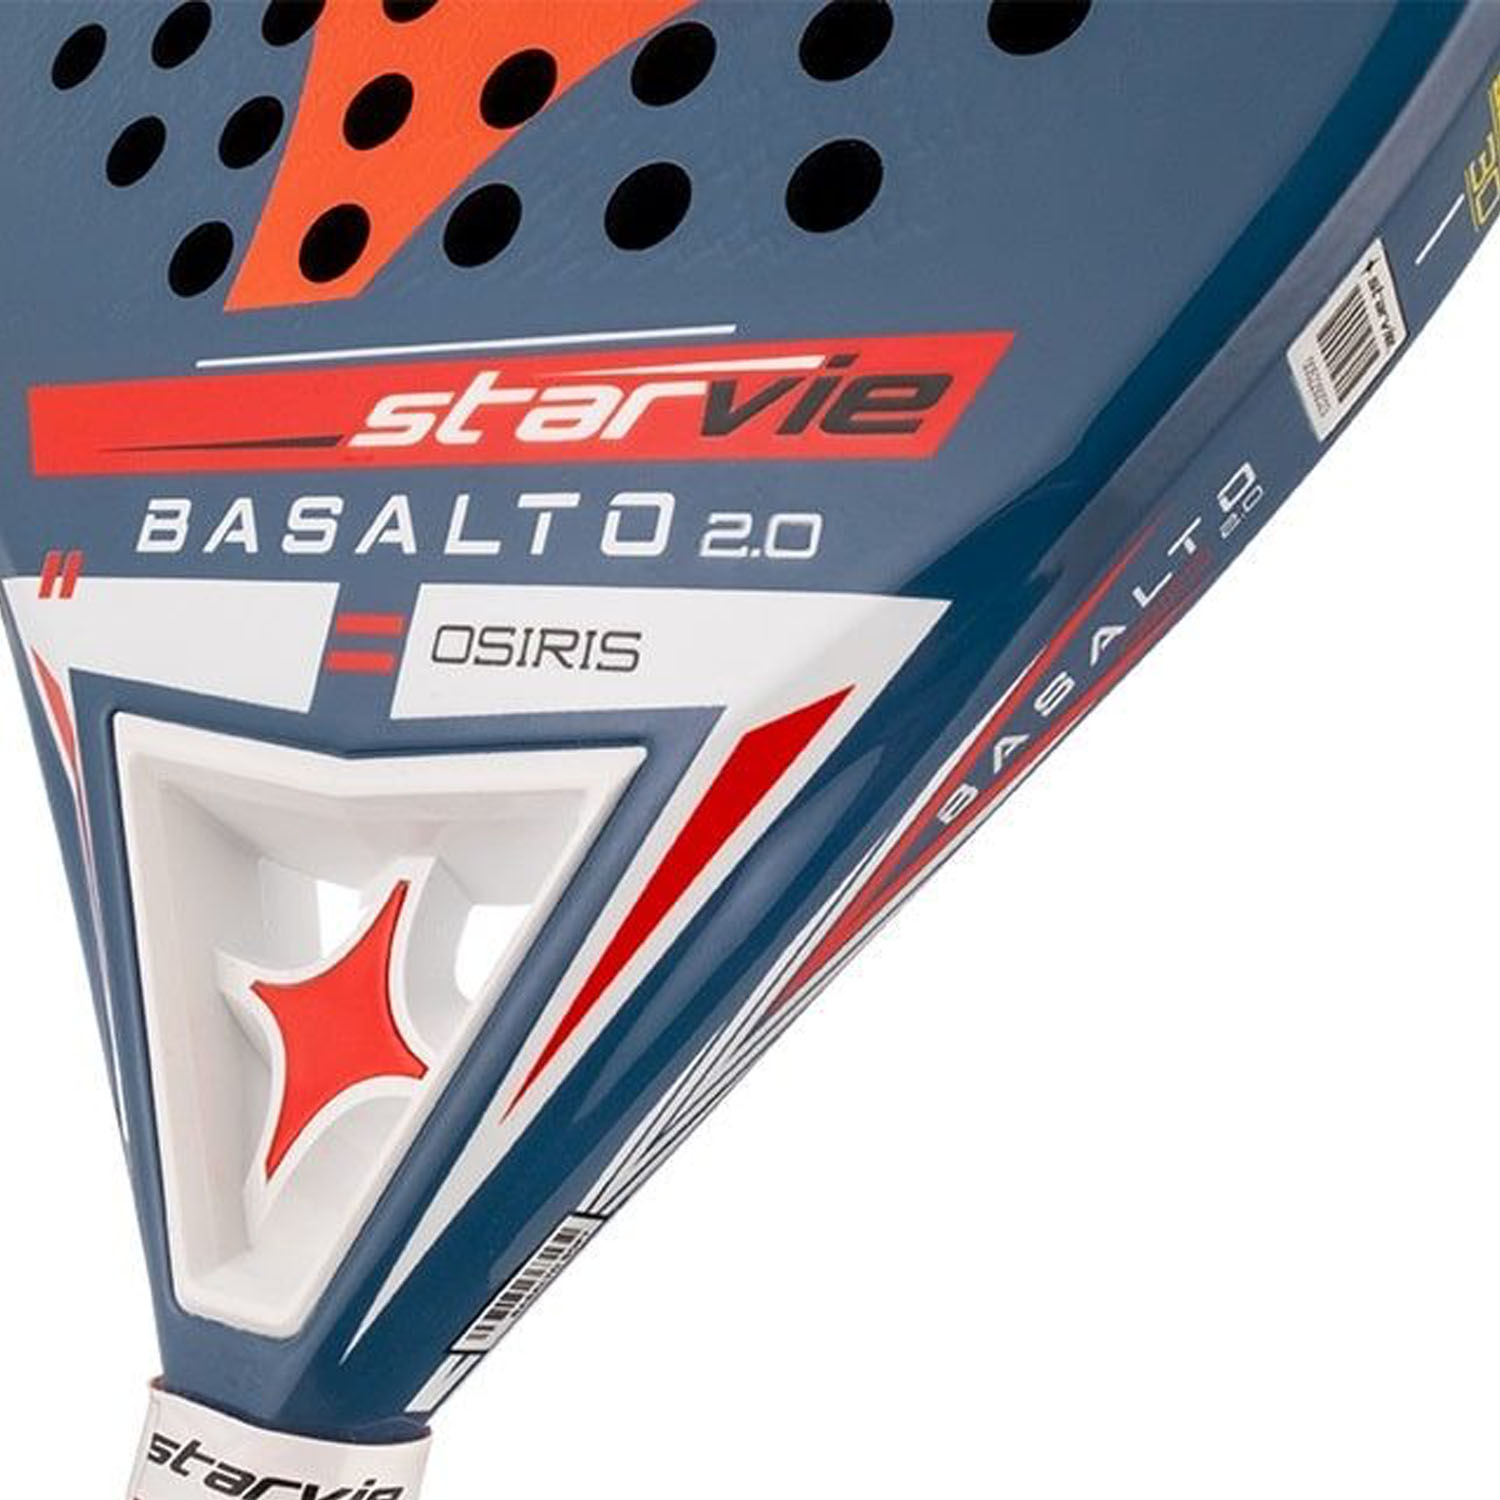 StarVie Basalto Osiris 2.0 Padel - Blue/Red